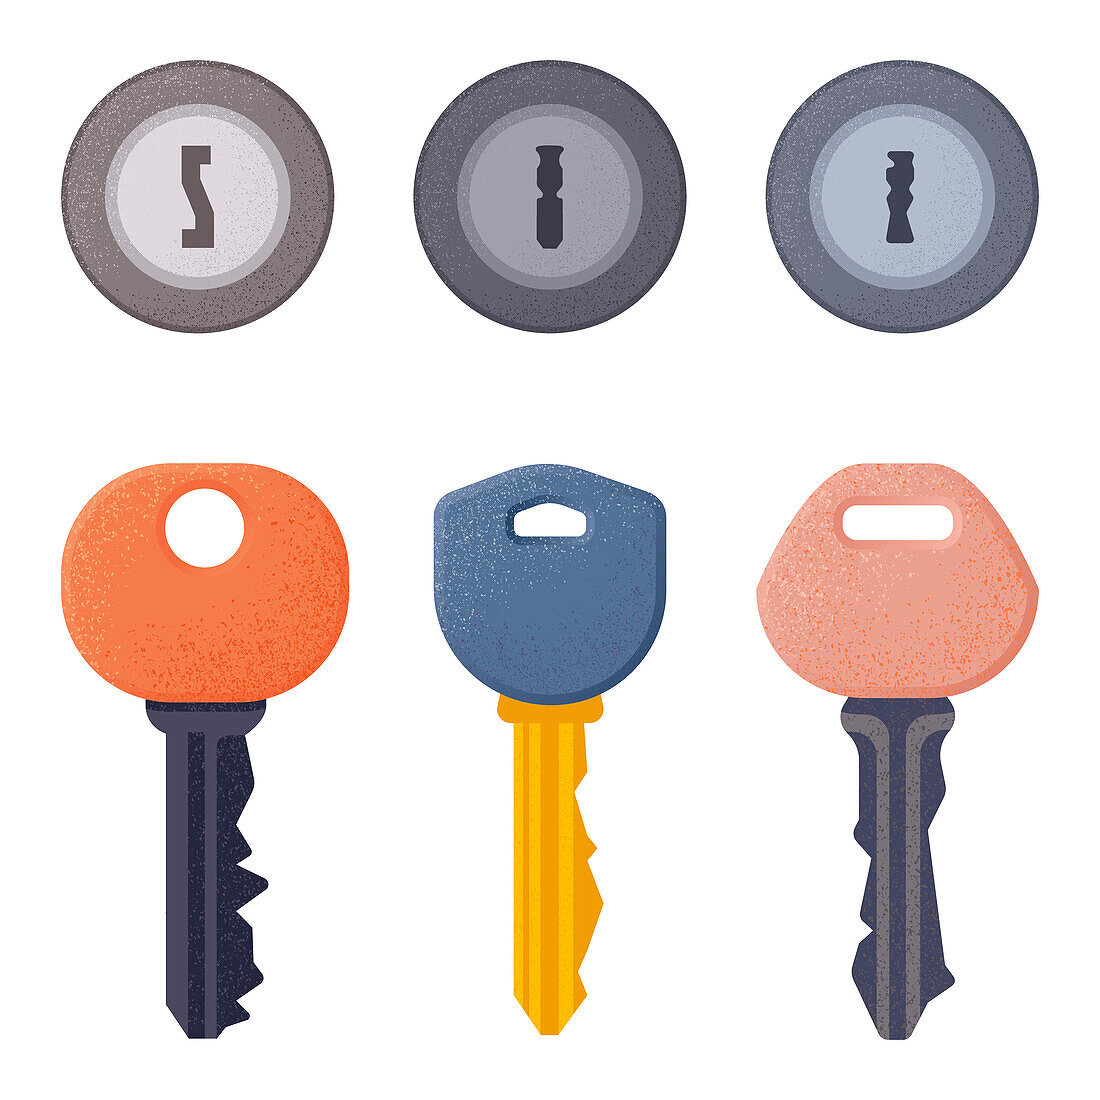 Keys and keyholes, illustration